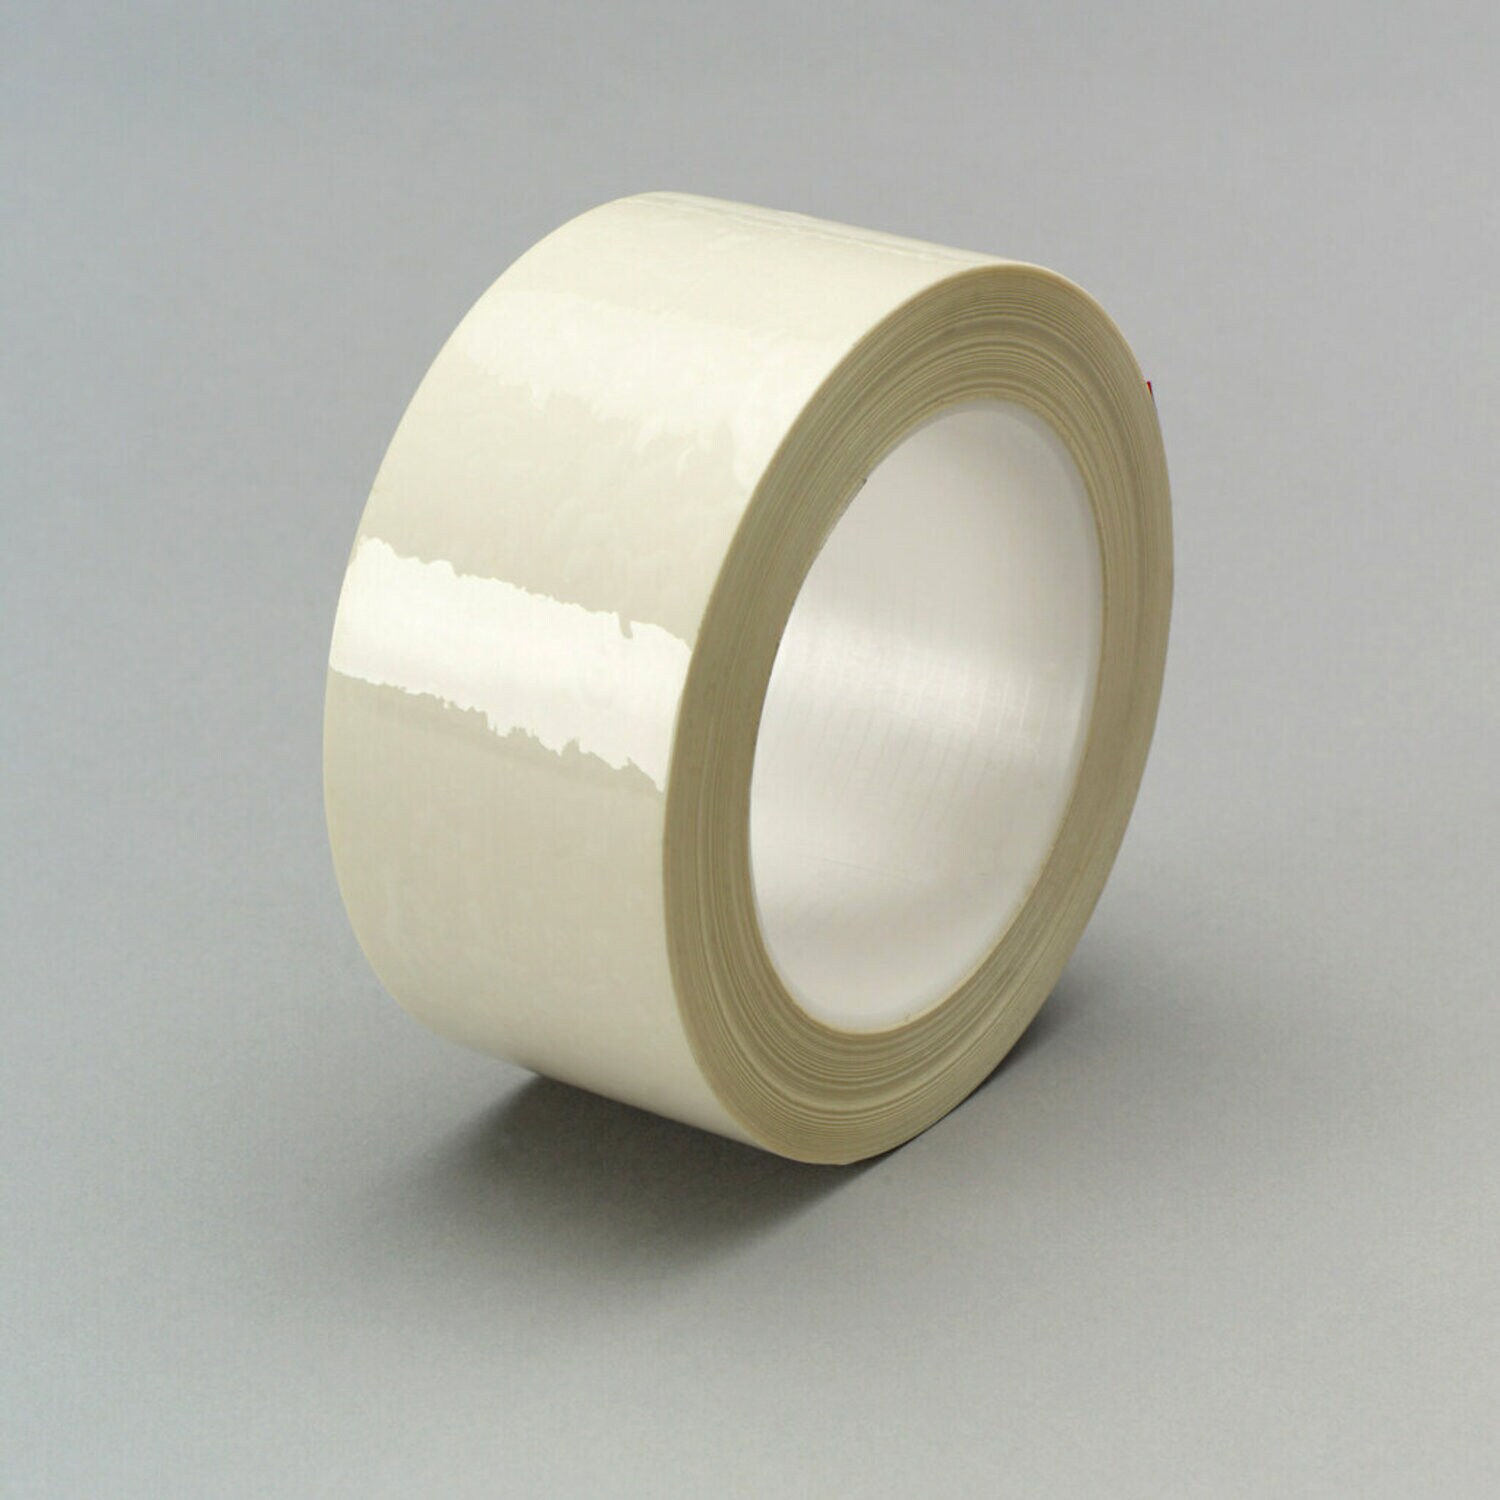 7000001505 - 3M High Temperature Nylon Film Tape 855, White, 1 in x 72 yd, 3.6 mil,
36 rolls per case